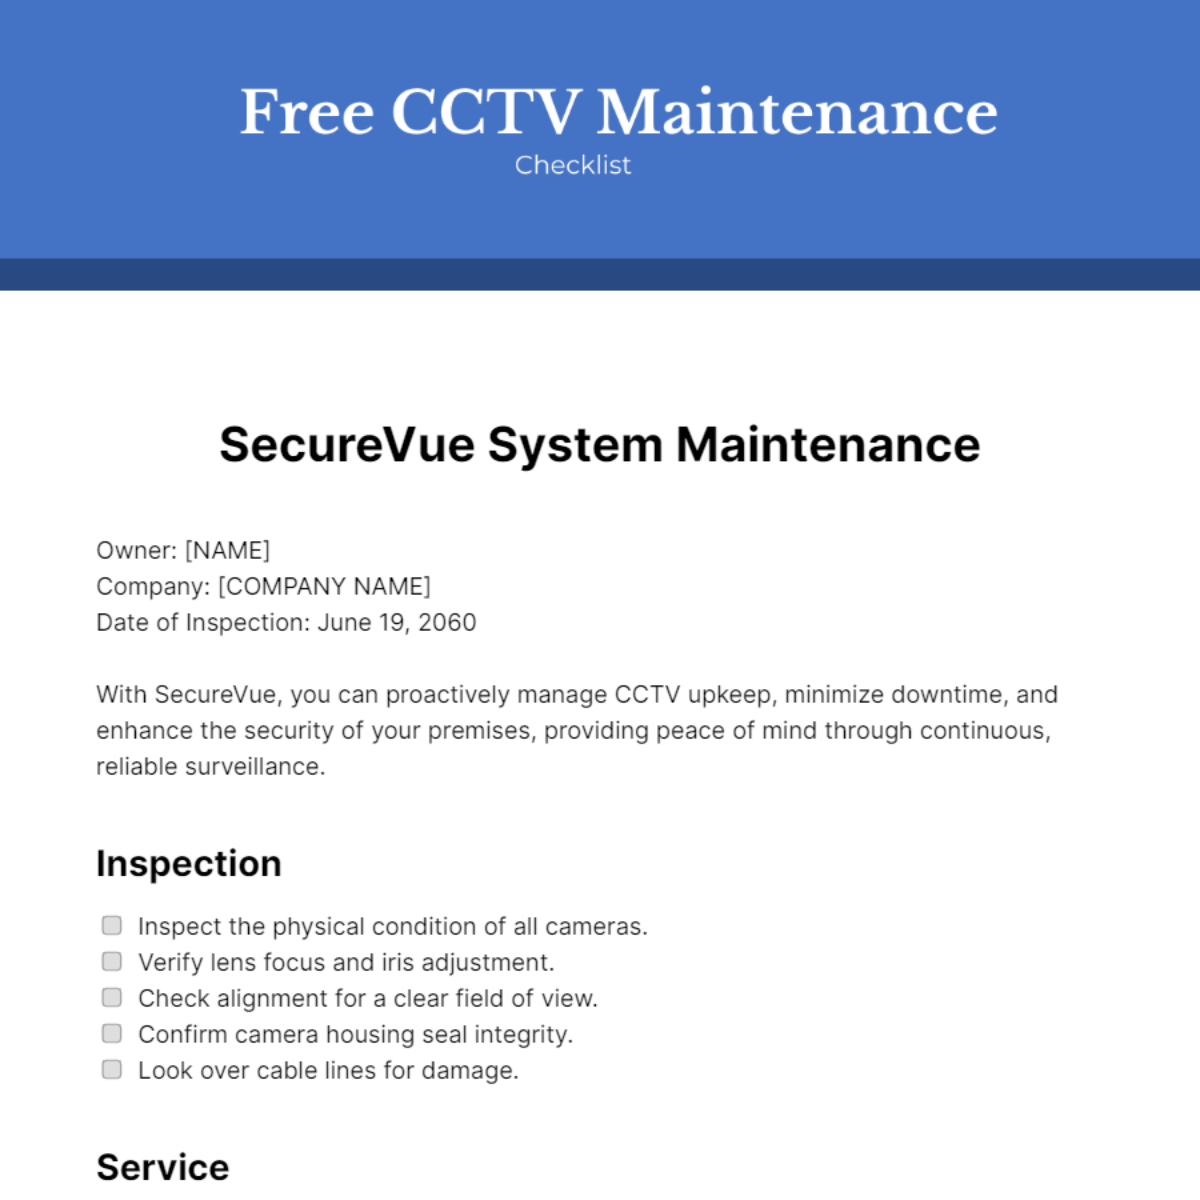 Free CCTV Maintenance Checklist Template